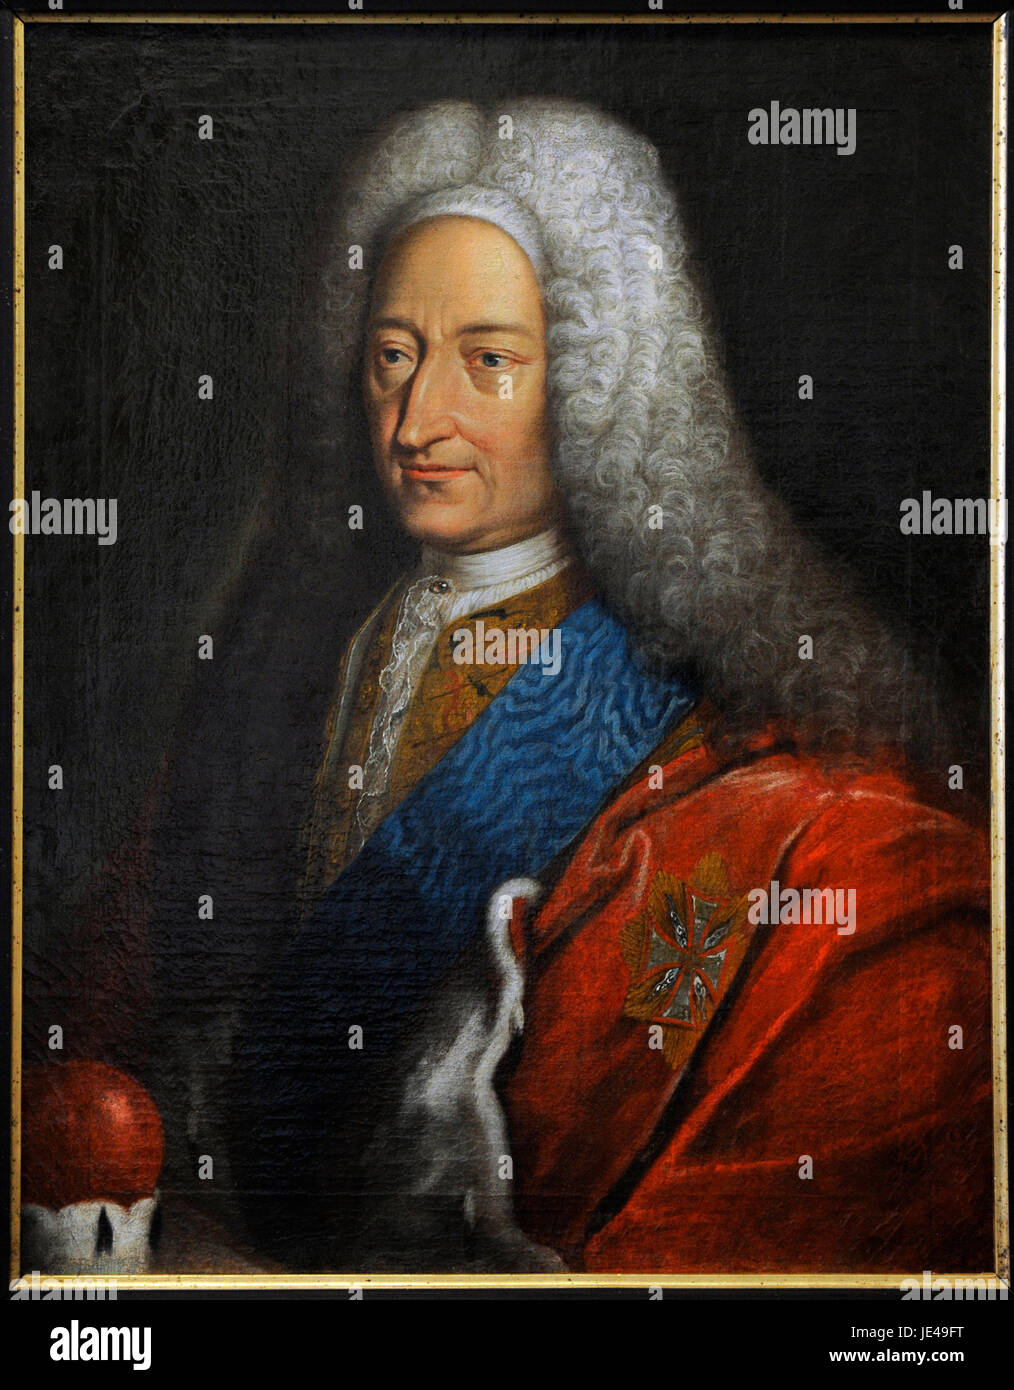 Kazimierz Czartoryski (1674-1741). Duke, Castellan of Vilnius, Grand Treasurer of Lithuania. Portrait by Lithuanian artist, 18th century. Vilnius Picture Gallery. Lithuania. Stock Photo